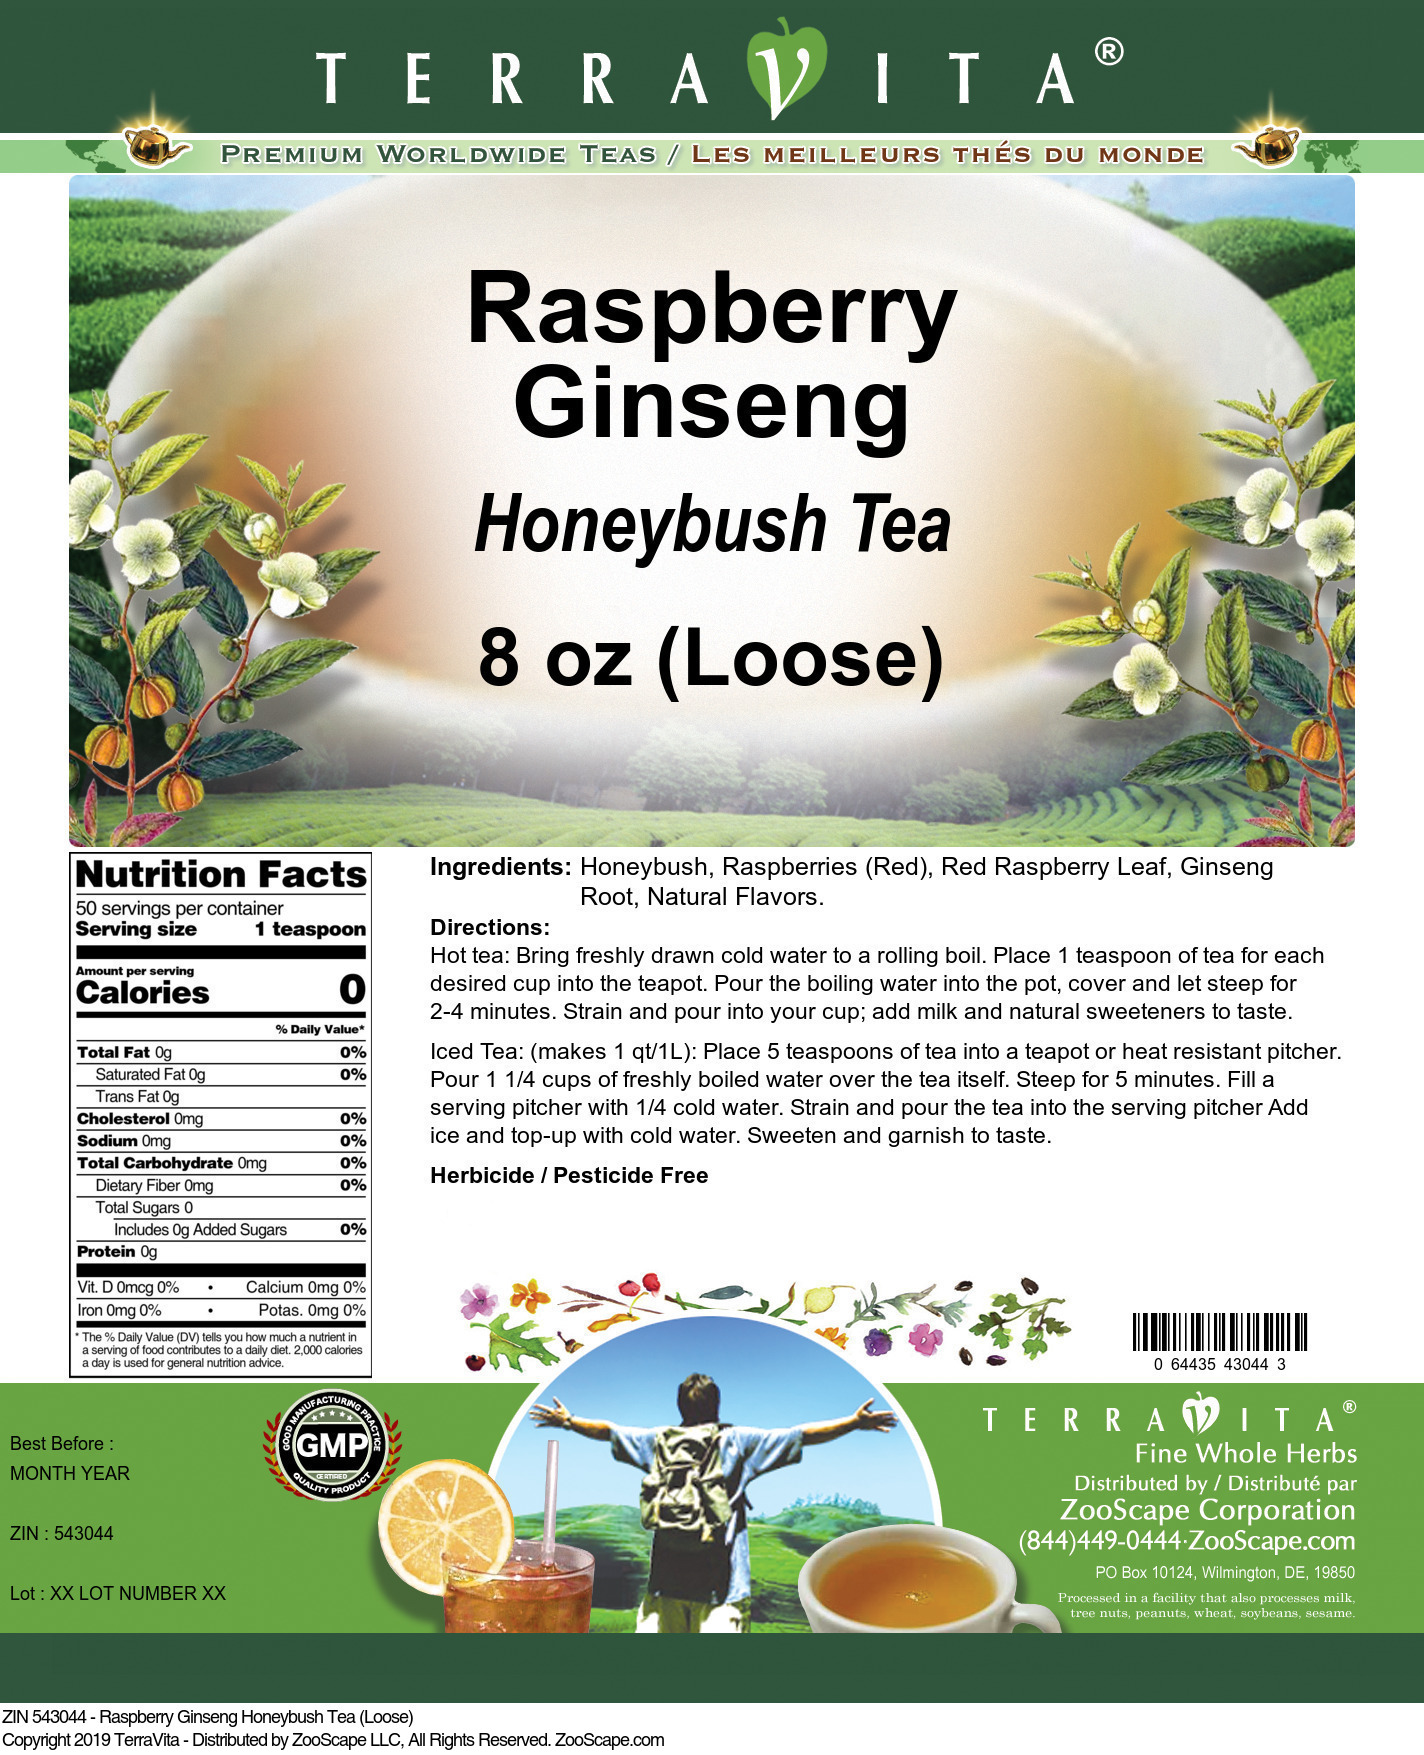 Raspberry Ginseng Honeybush Tea (Loose) - Label